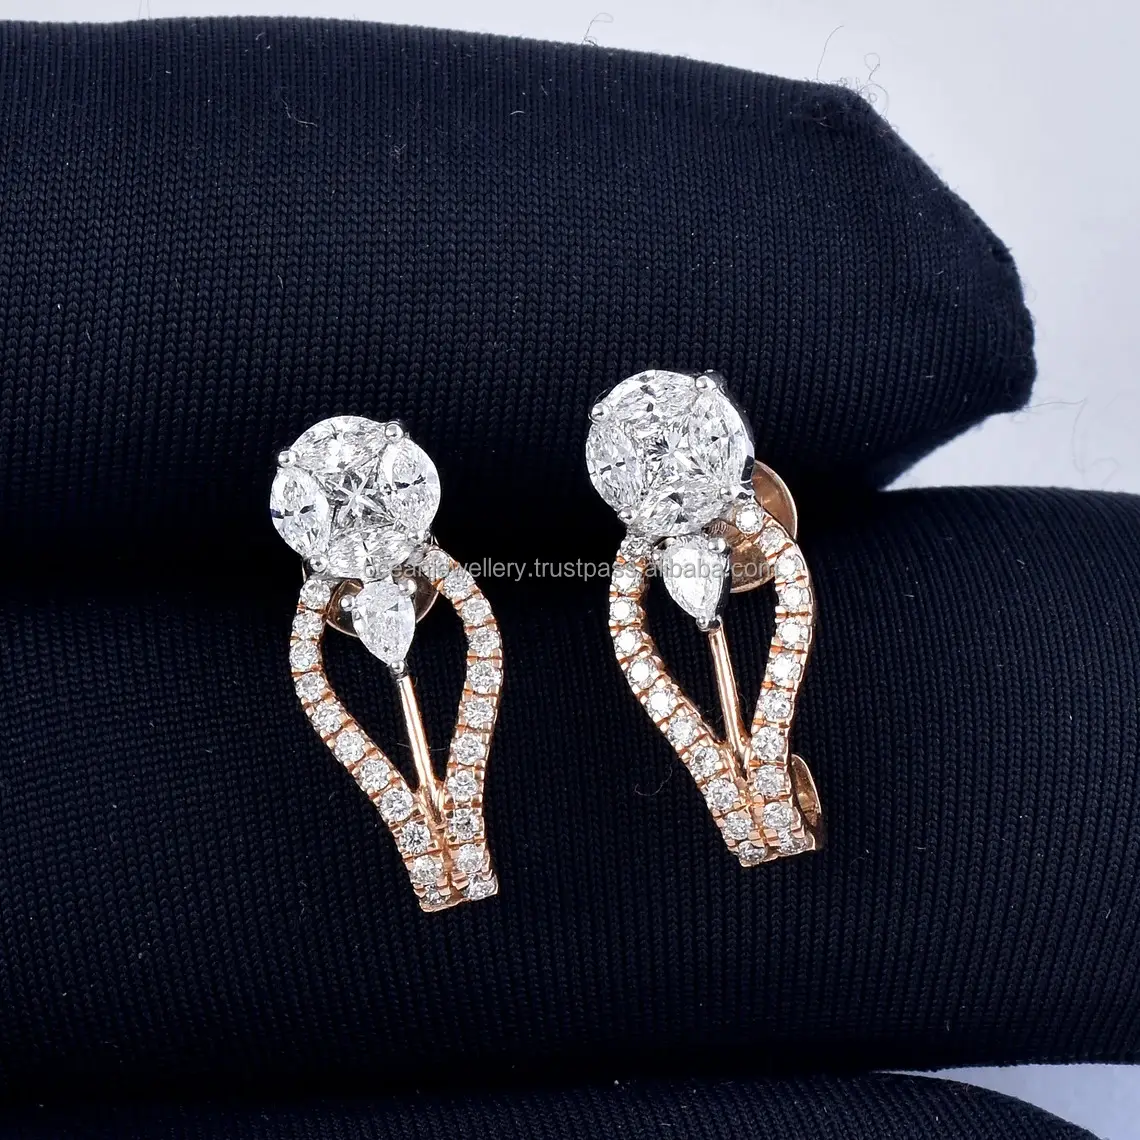 18k Gold Natural Round Shaped Diamond Stud Earring For Women Push Back Stud Earrings